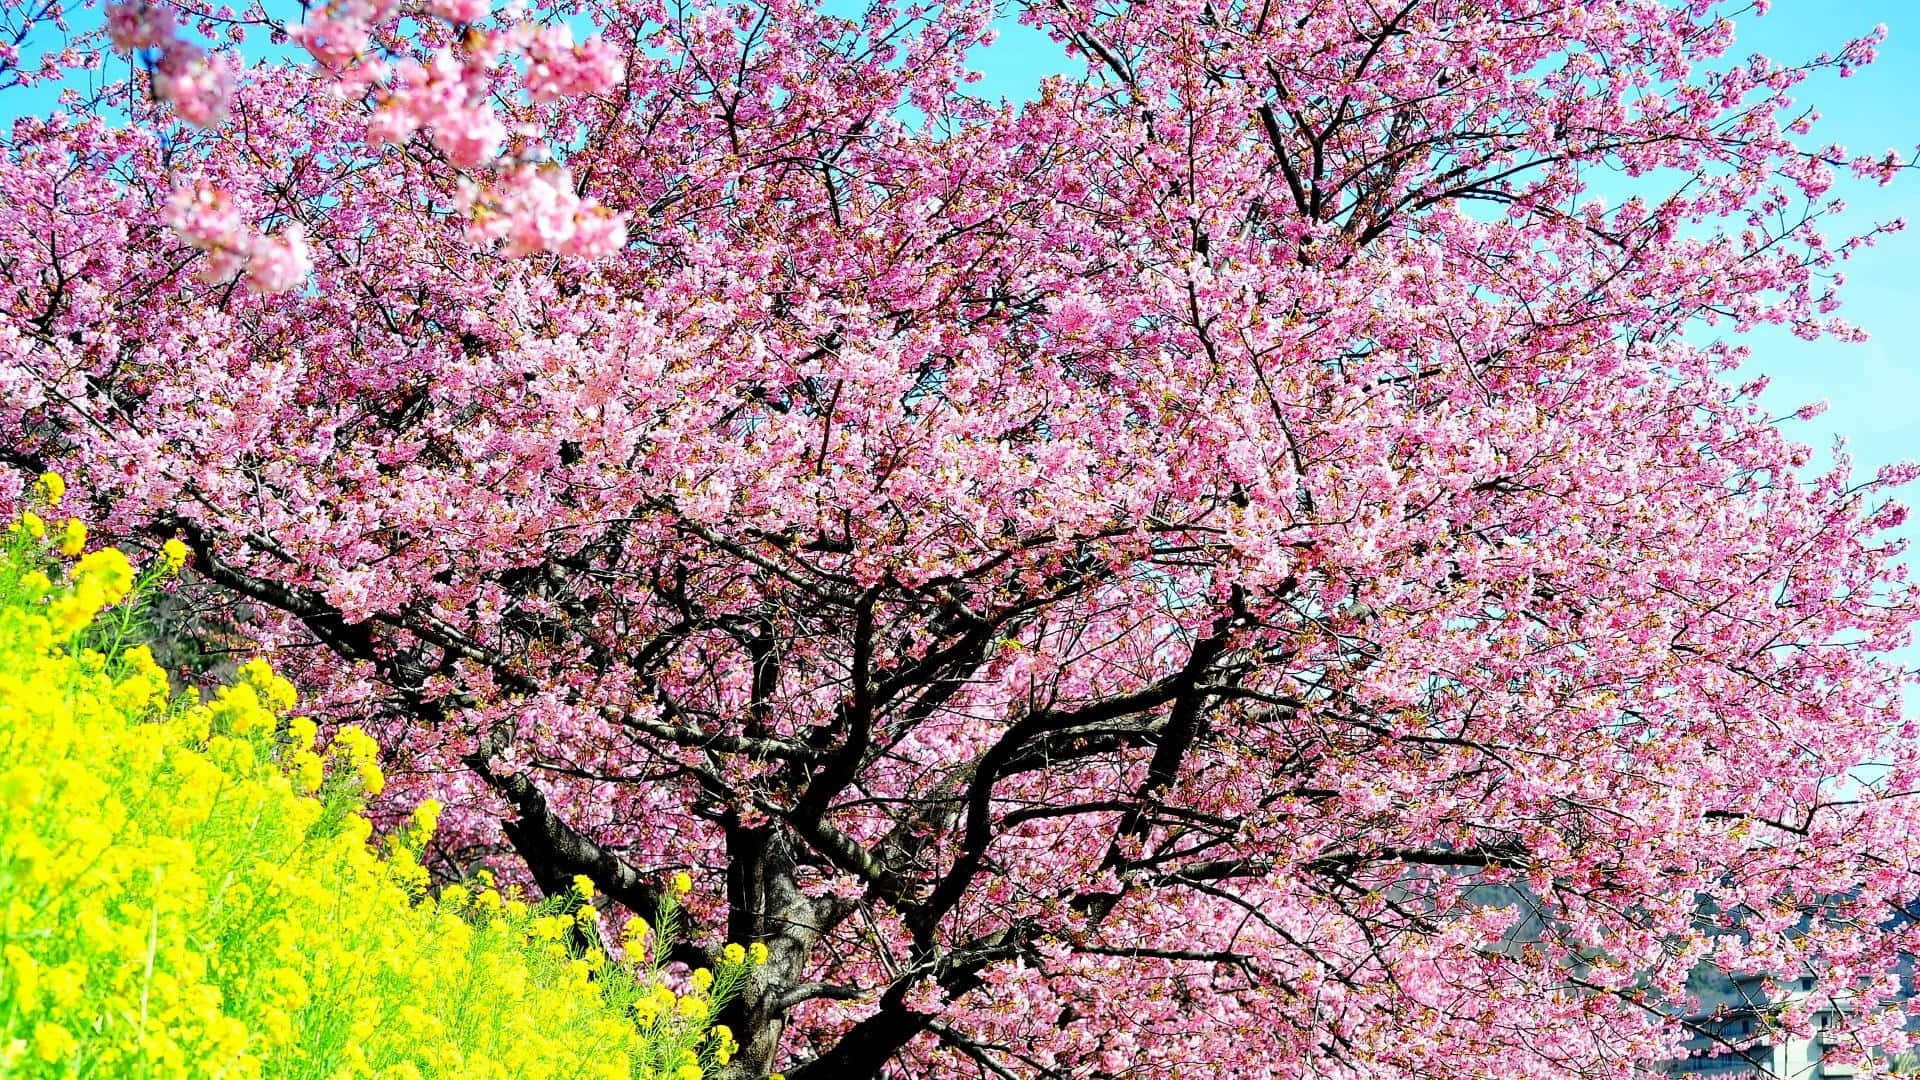 Beautiful Cherry Blossom Tree in Full Bloom